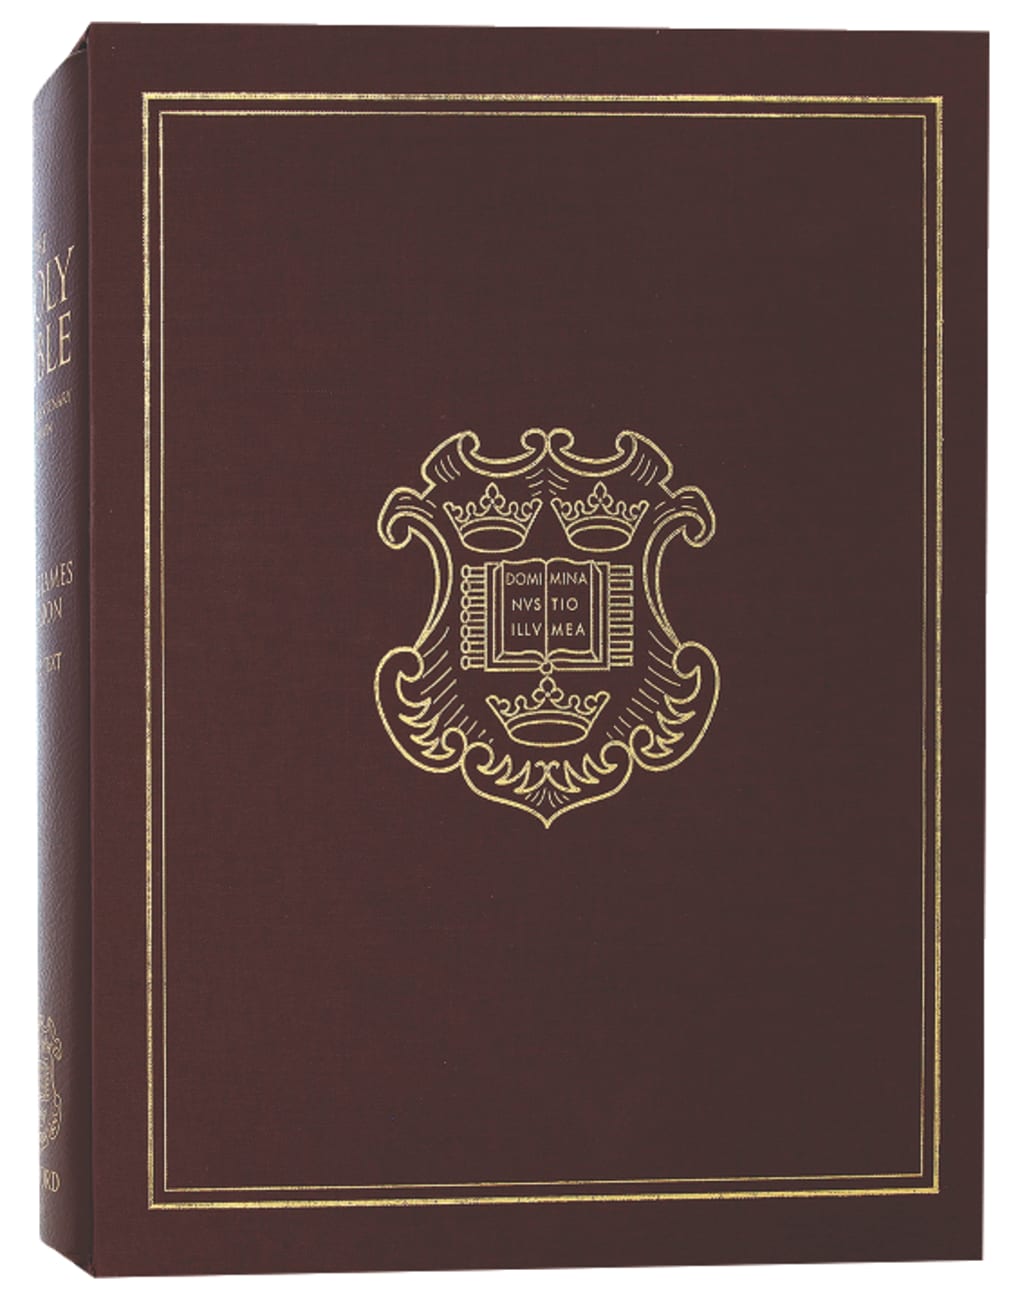 KJV Holy Bible 1611, Includes Apocrypha (400th Anniversary Edition) Hardback